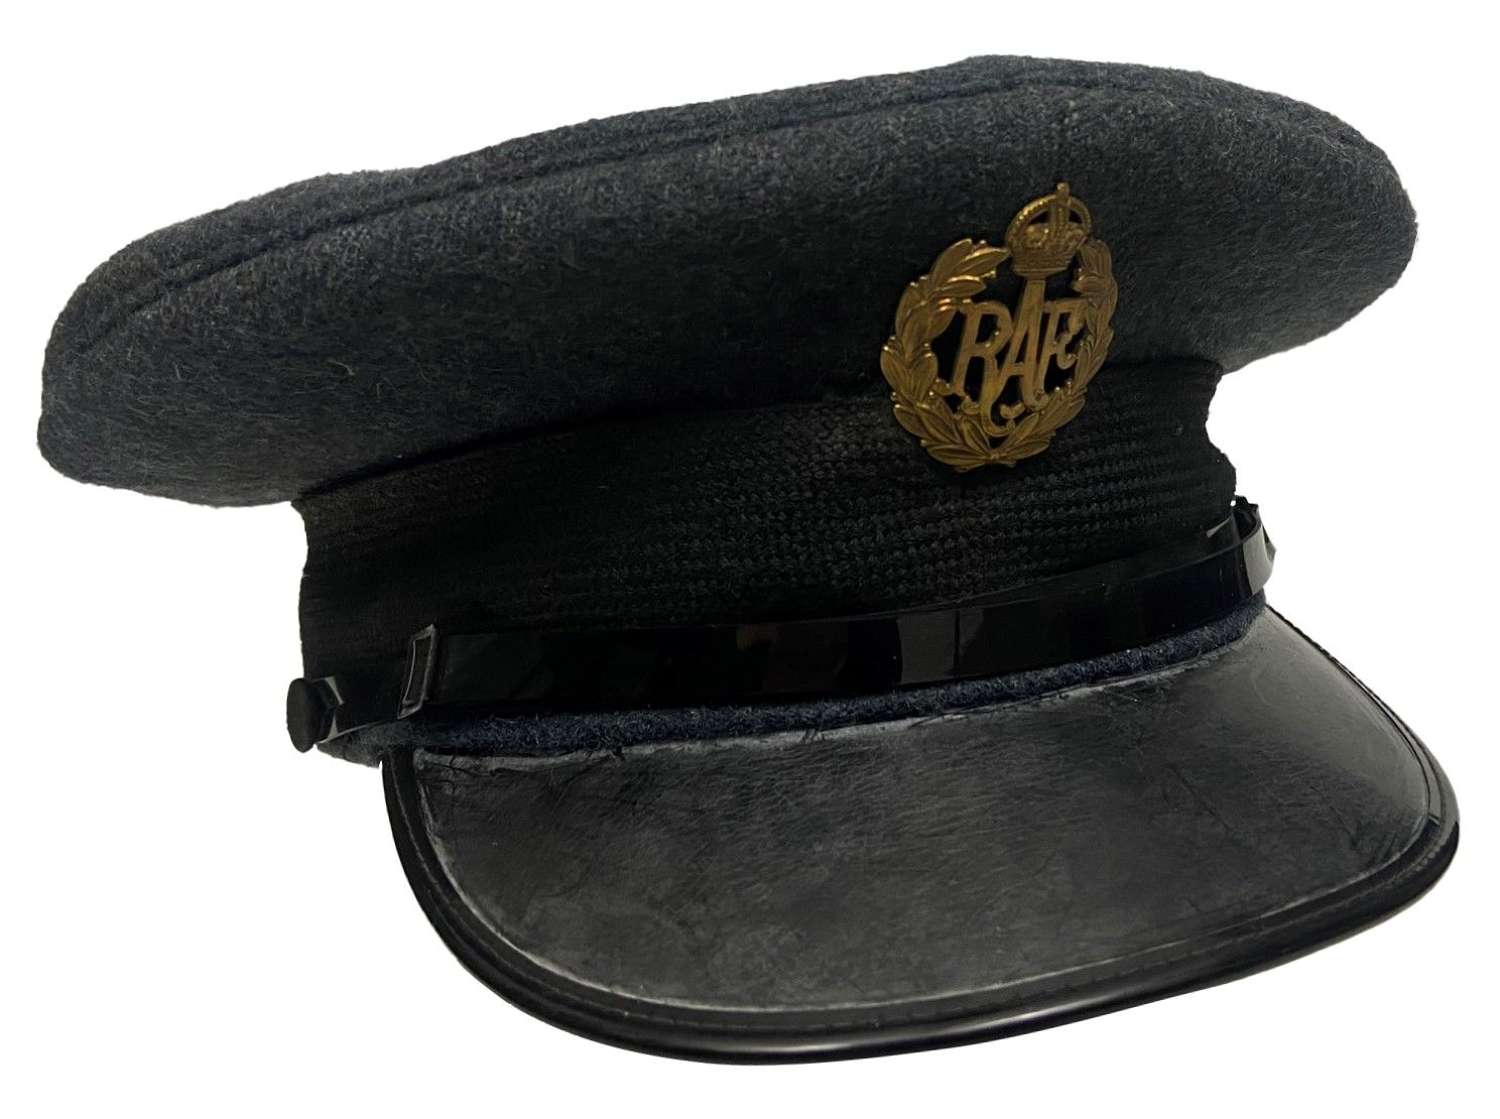 Original 1954 Dated RAF Ordinary Airman's Peaked Cap